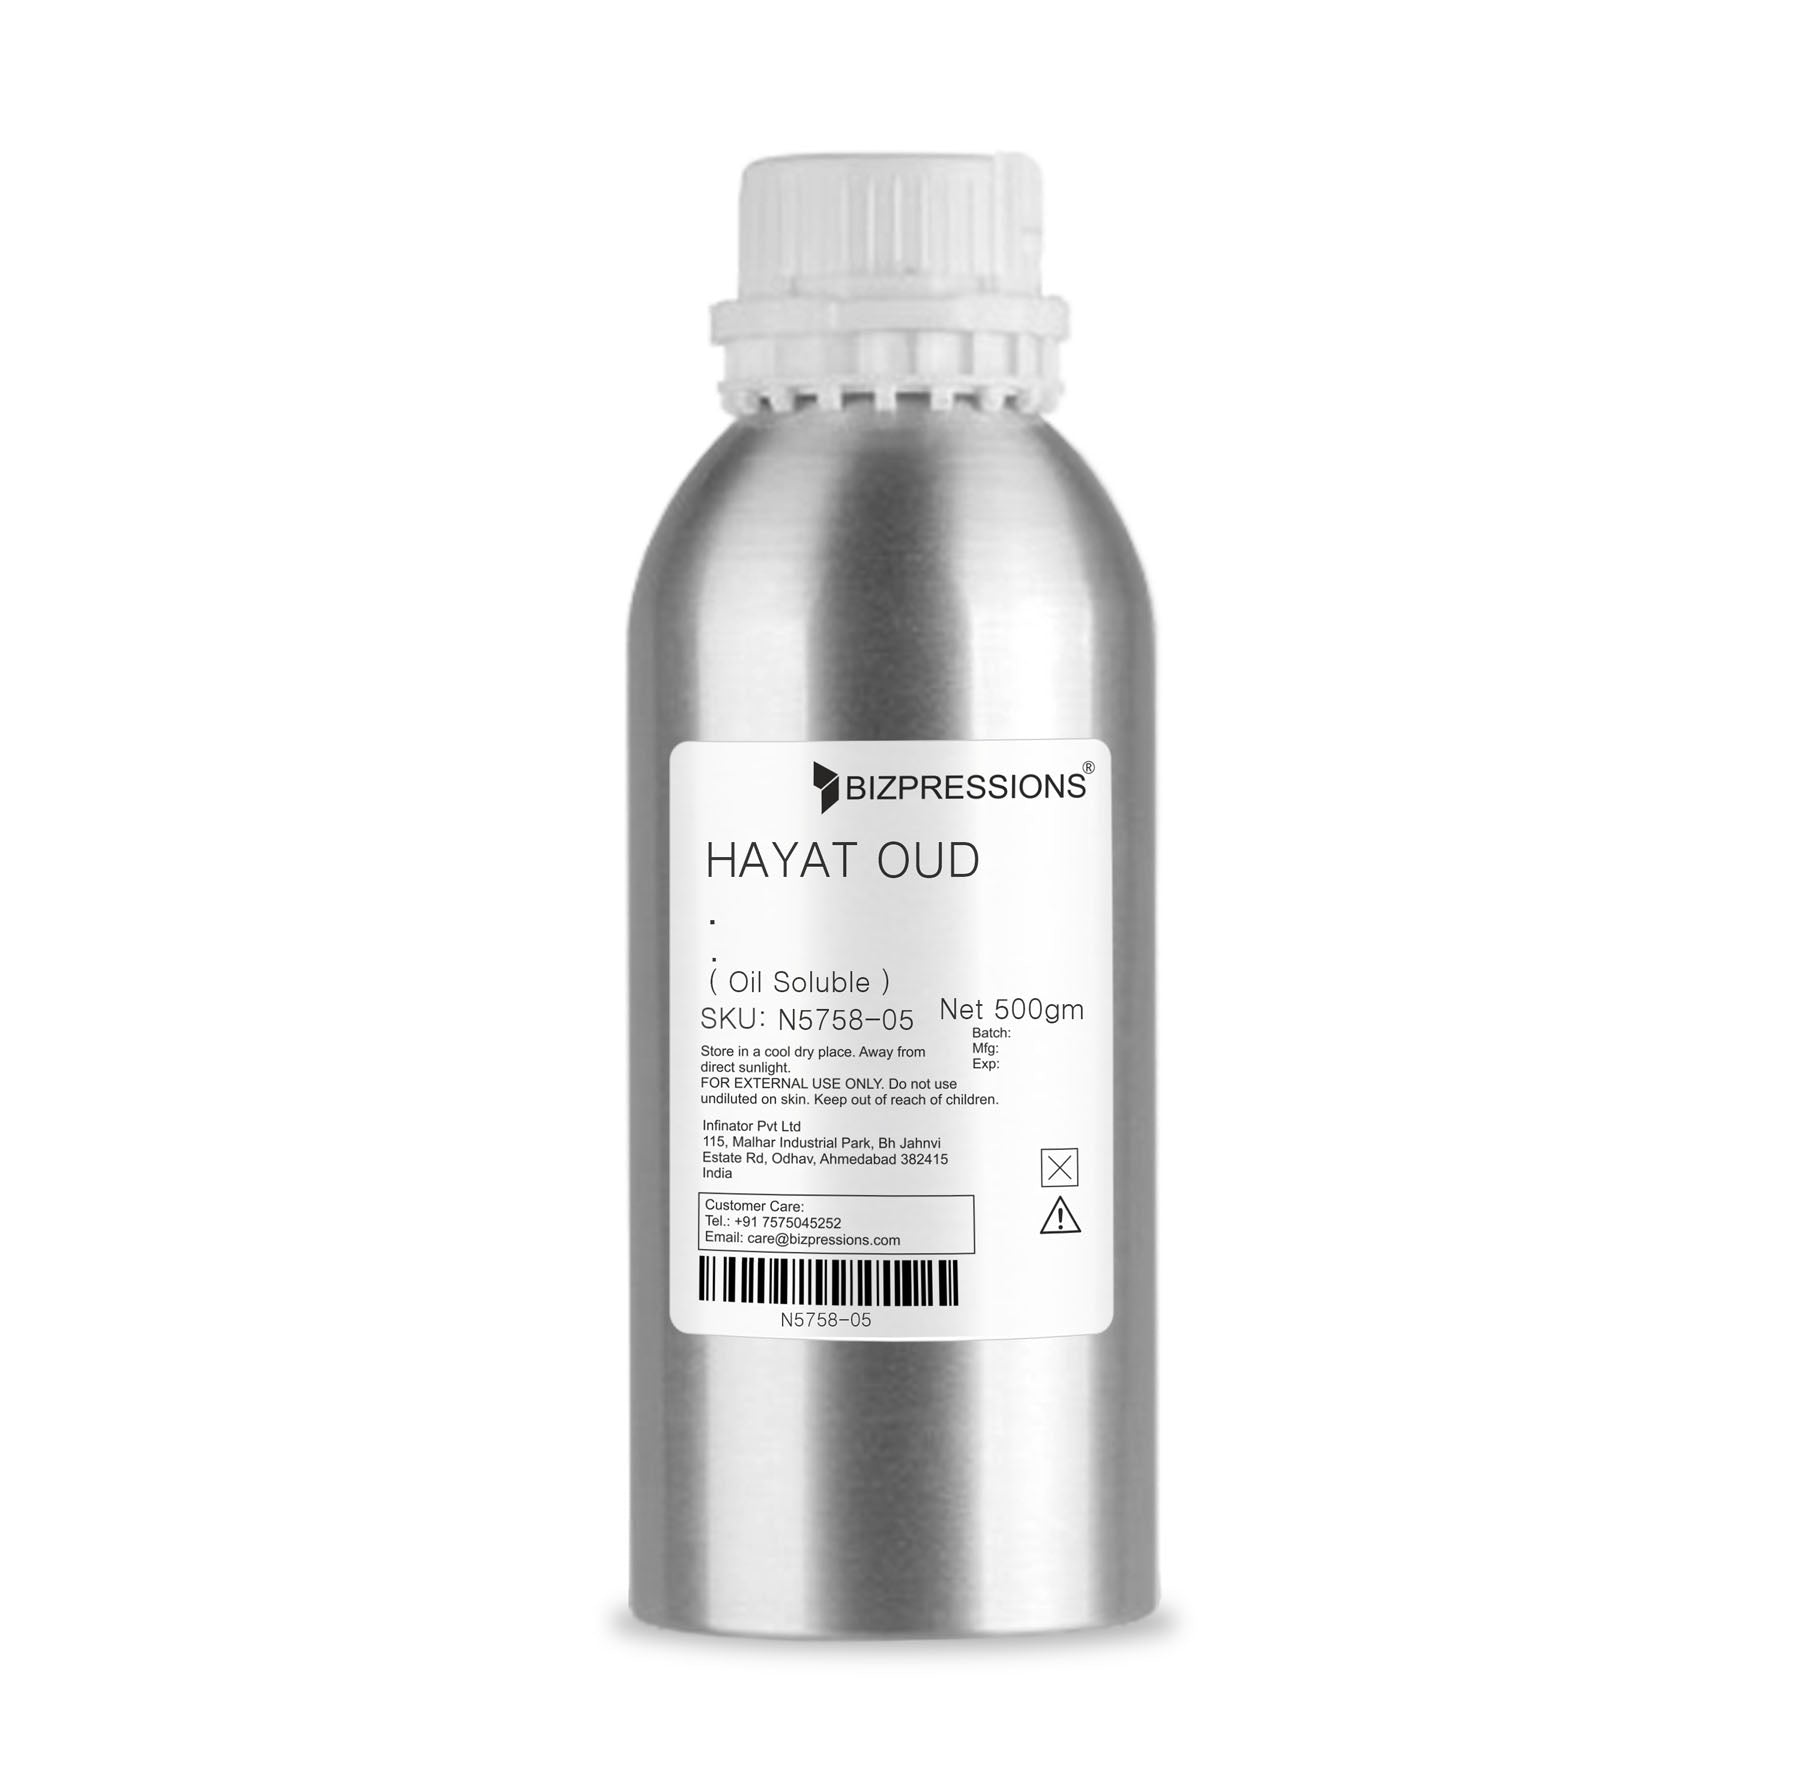 HAYAT OUD - Fragrance ( Oil Soluble ) - 500 gm